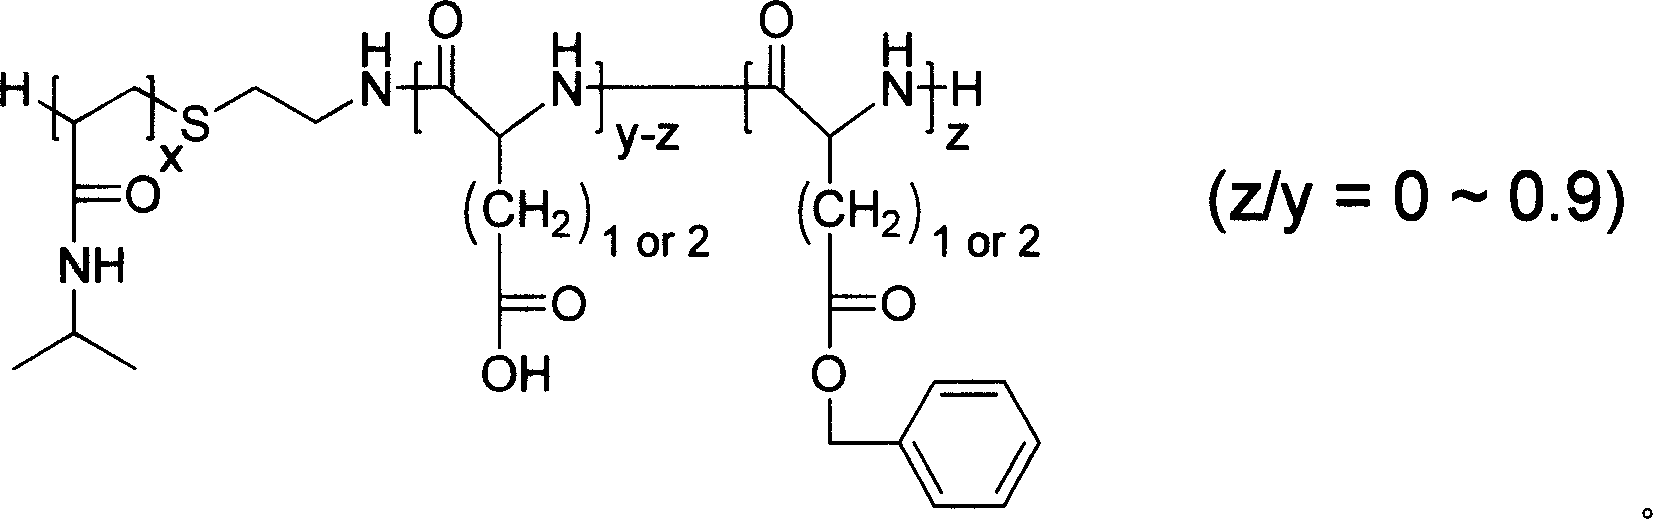 Poly N-isopropyl-acrylic-amide-poly amino-acid two-block copolymer and preparing method